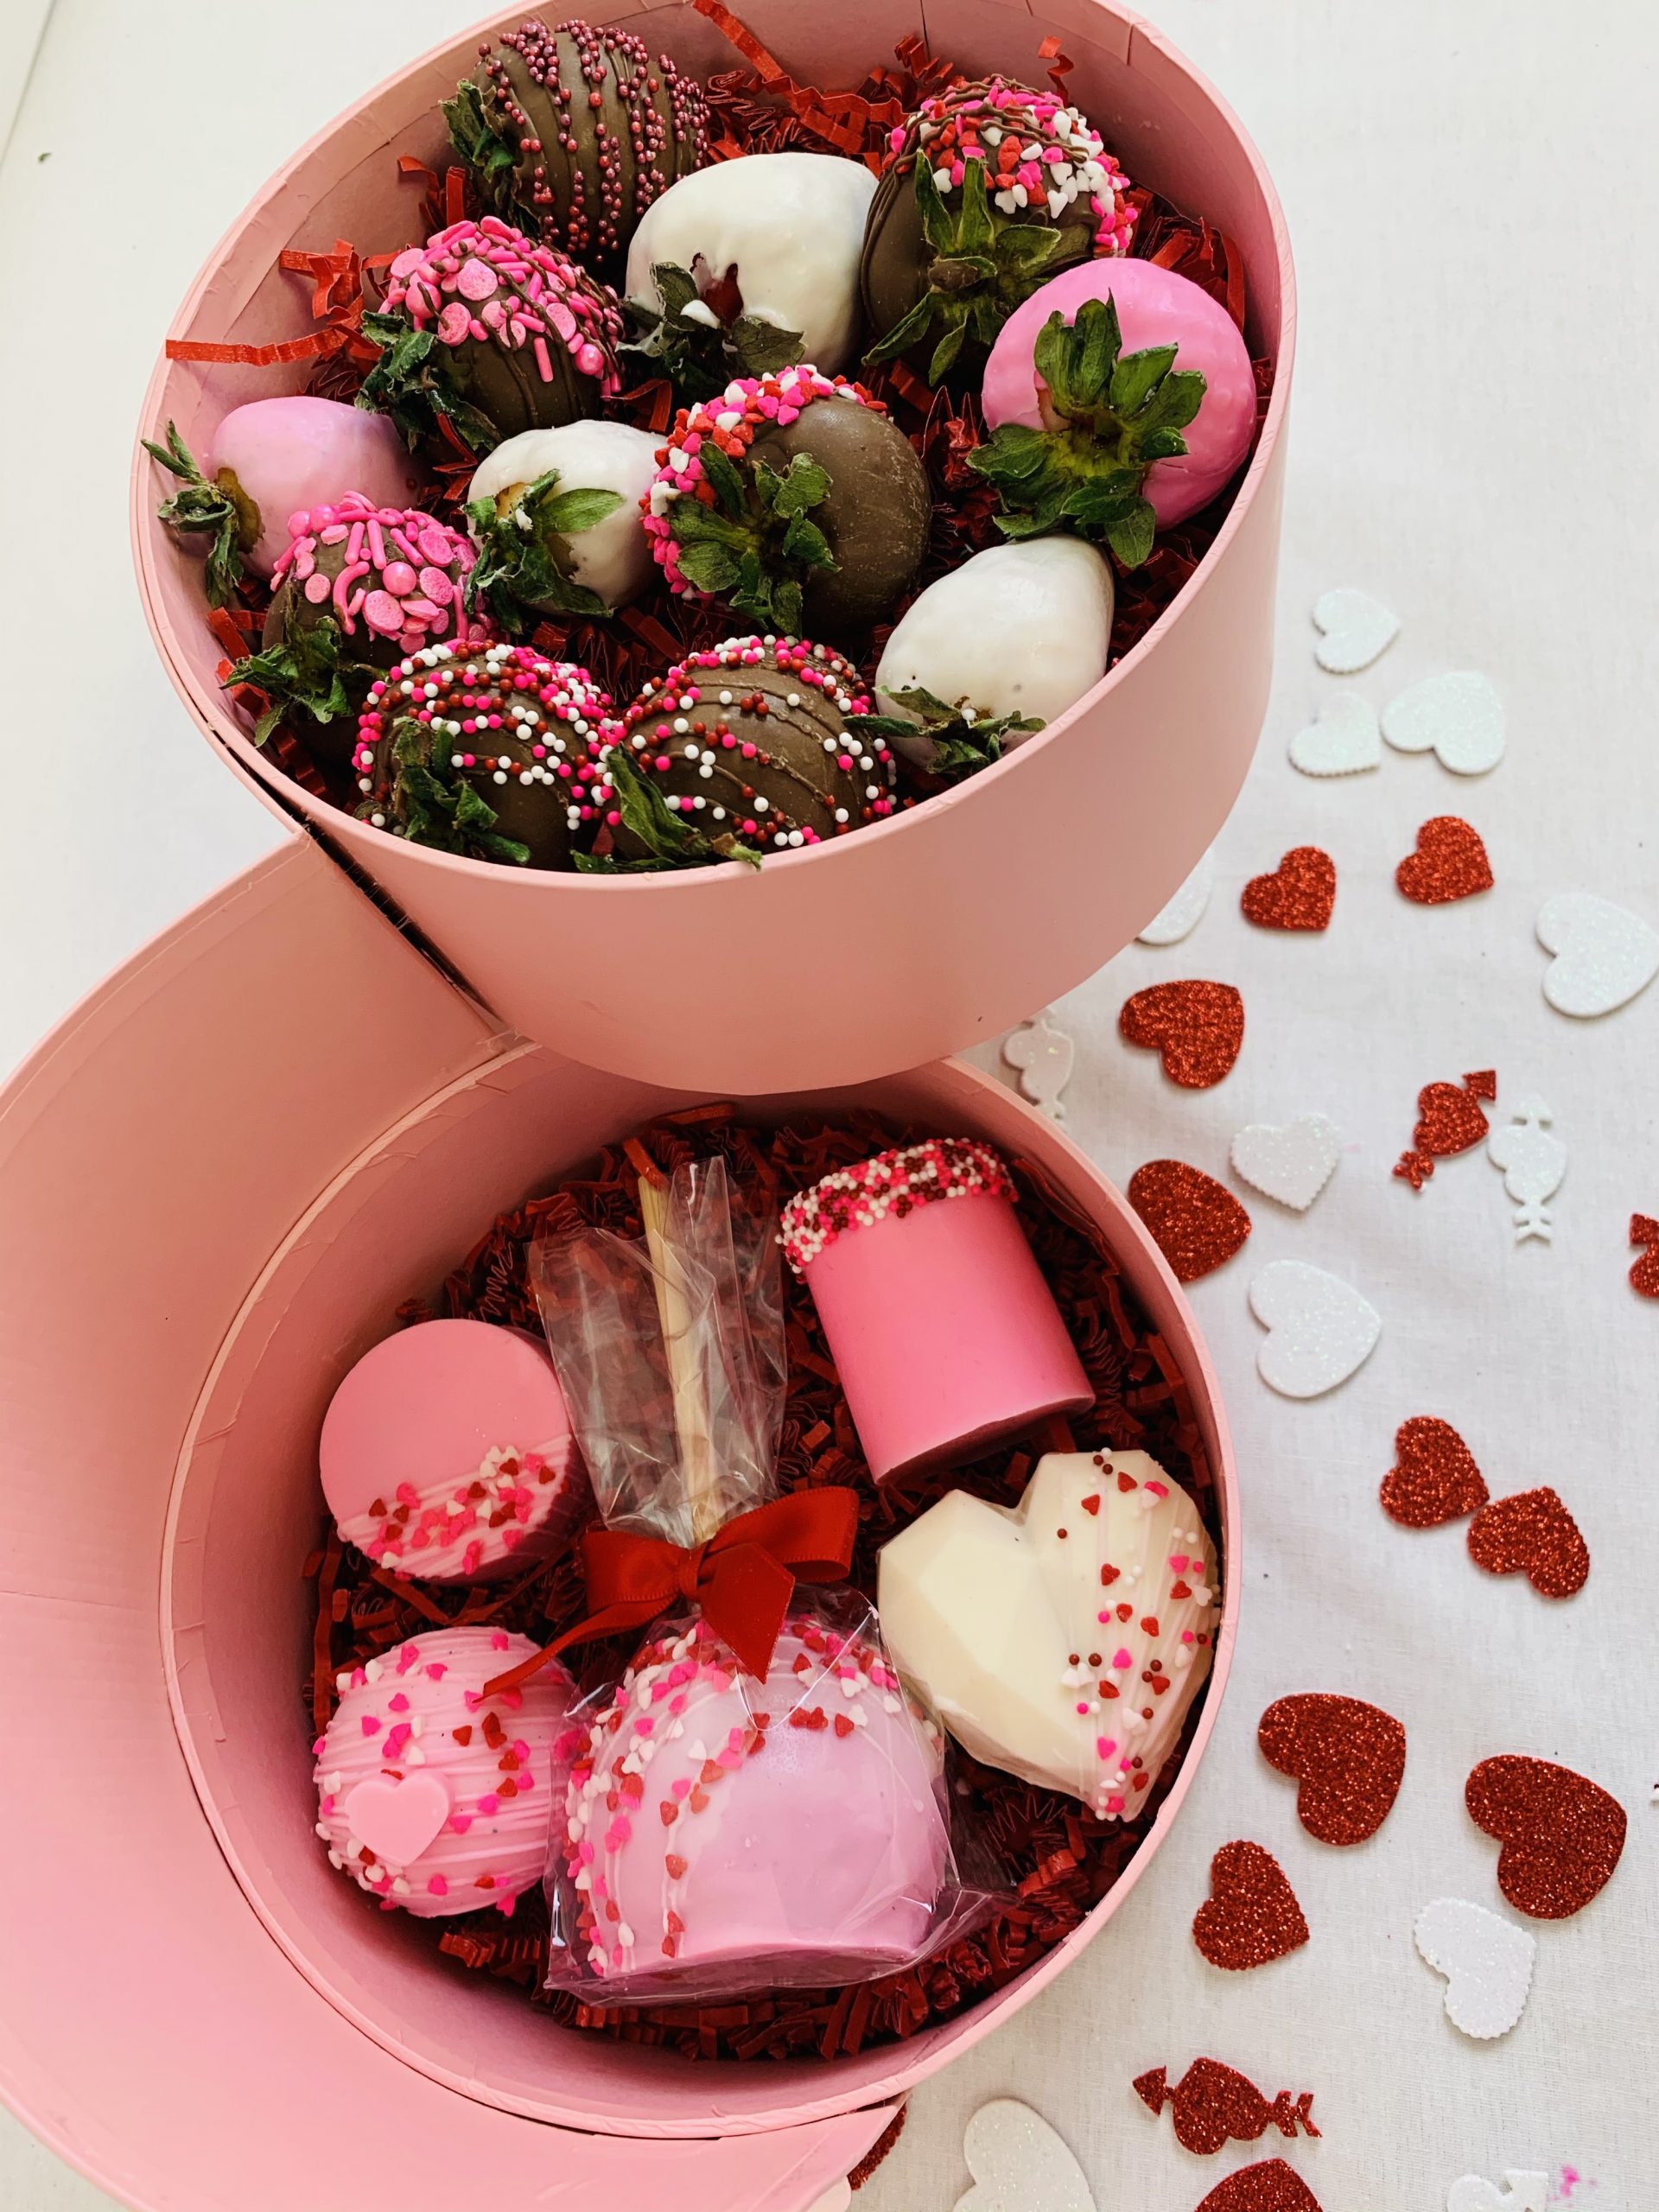 The Valentine's Day Sweet Treat Gift Box – Valentine's Day gift